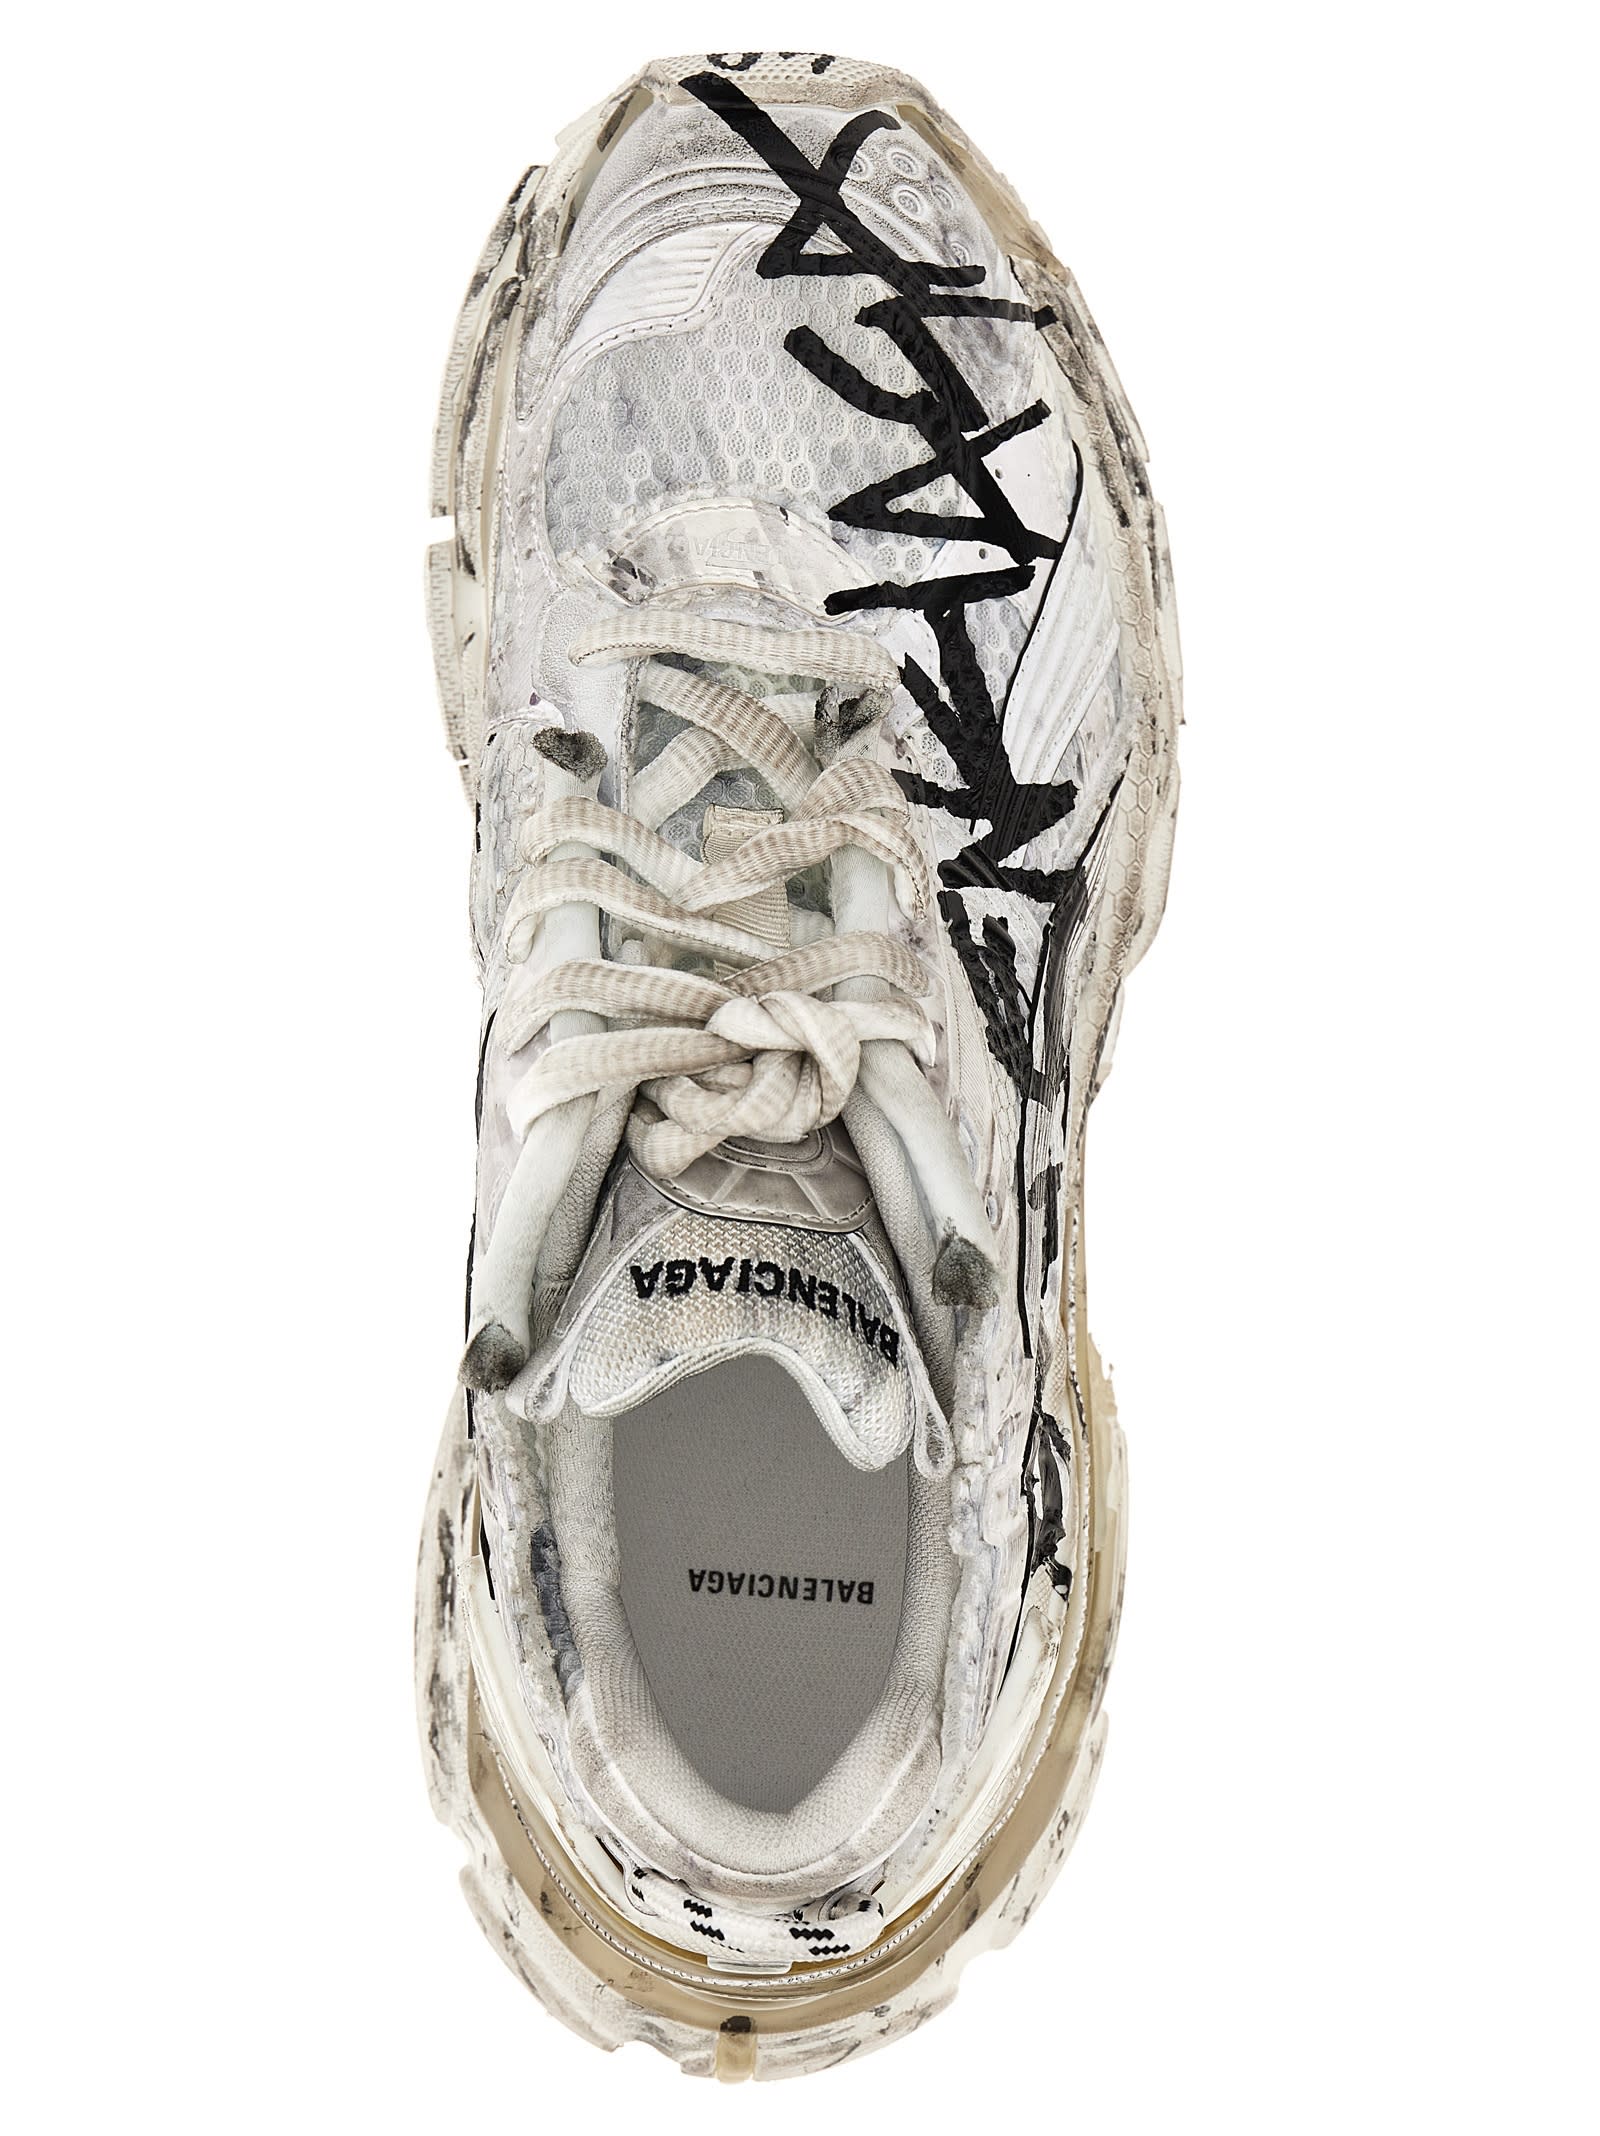 Shop Balenciaga Runner Graffiti Sneakers In White/black